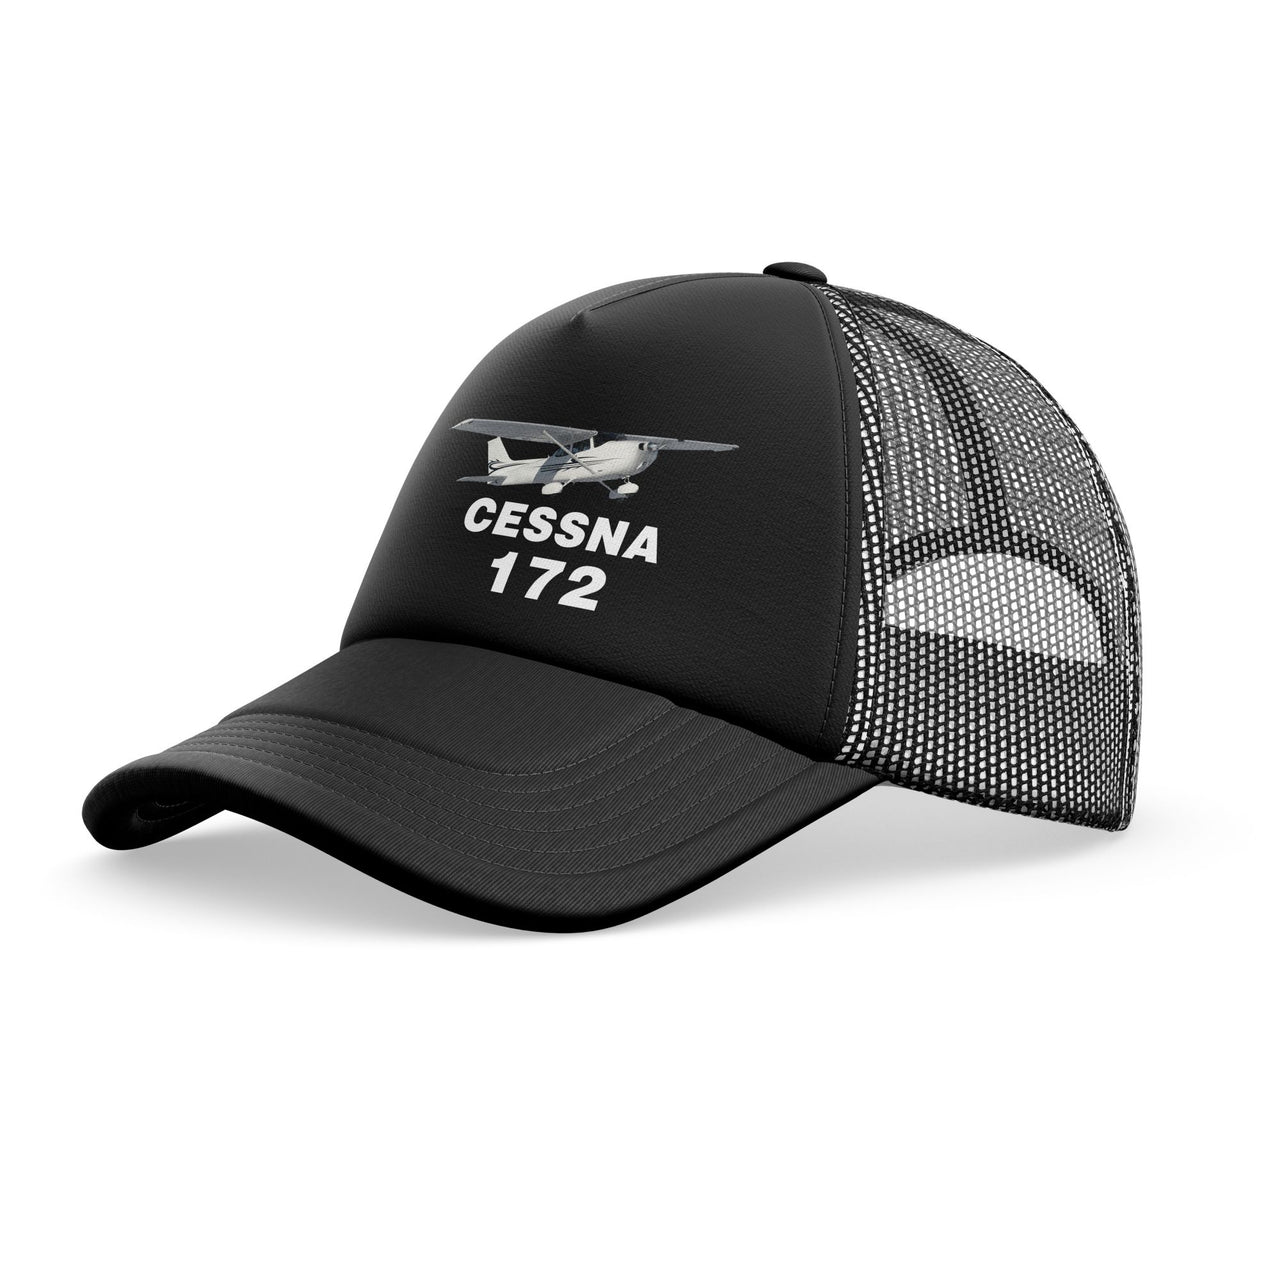 The Cessna 172 Designed Trucker Caps & Hats